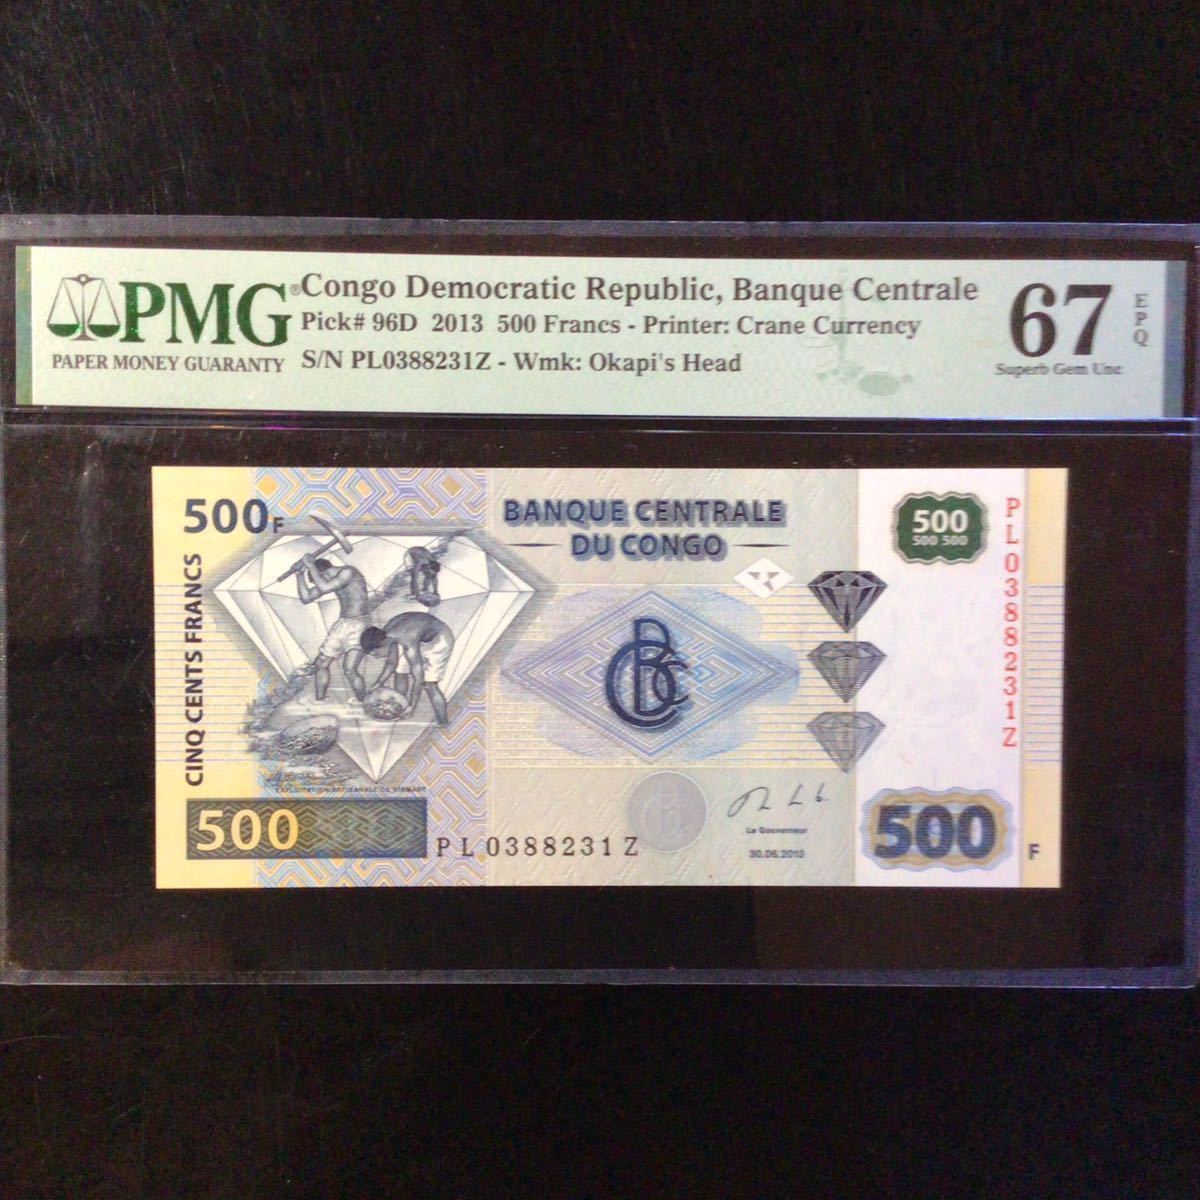 World Banknote Grading CONGO DEMOCRATIC REPUBLIC《Banque Centrale》500Francs【2013】『PMG Grading Superb Gdm Uncirculated 67 EPQ』